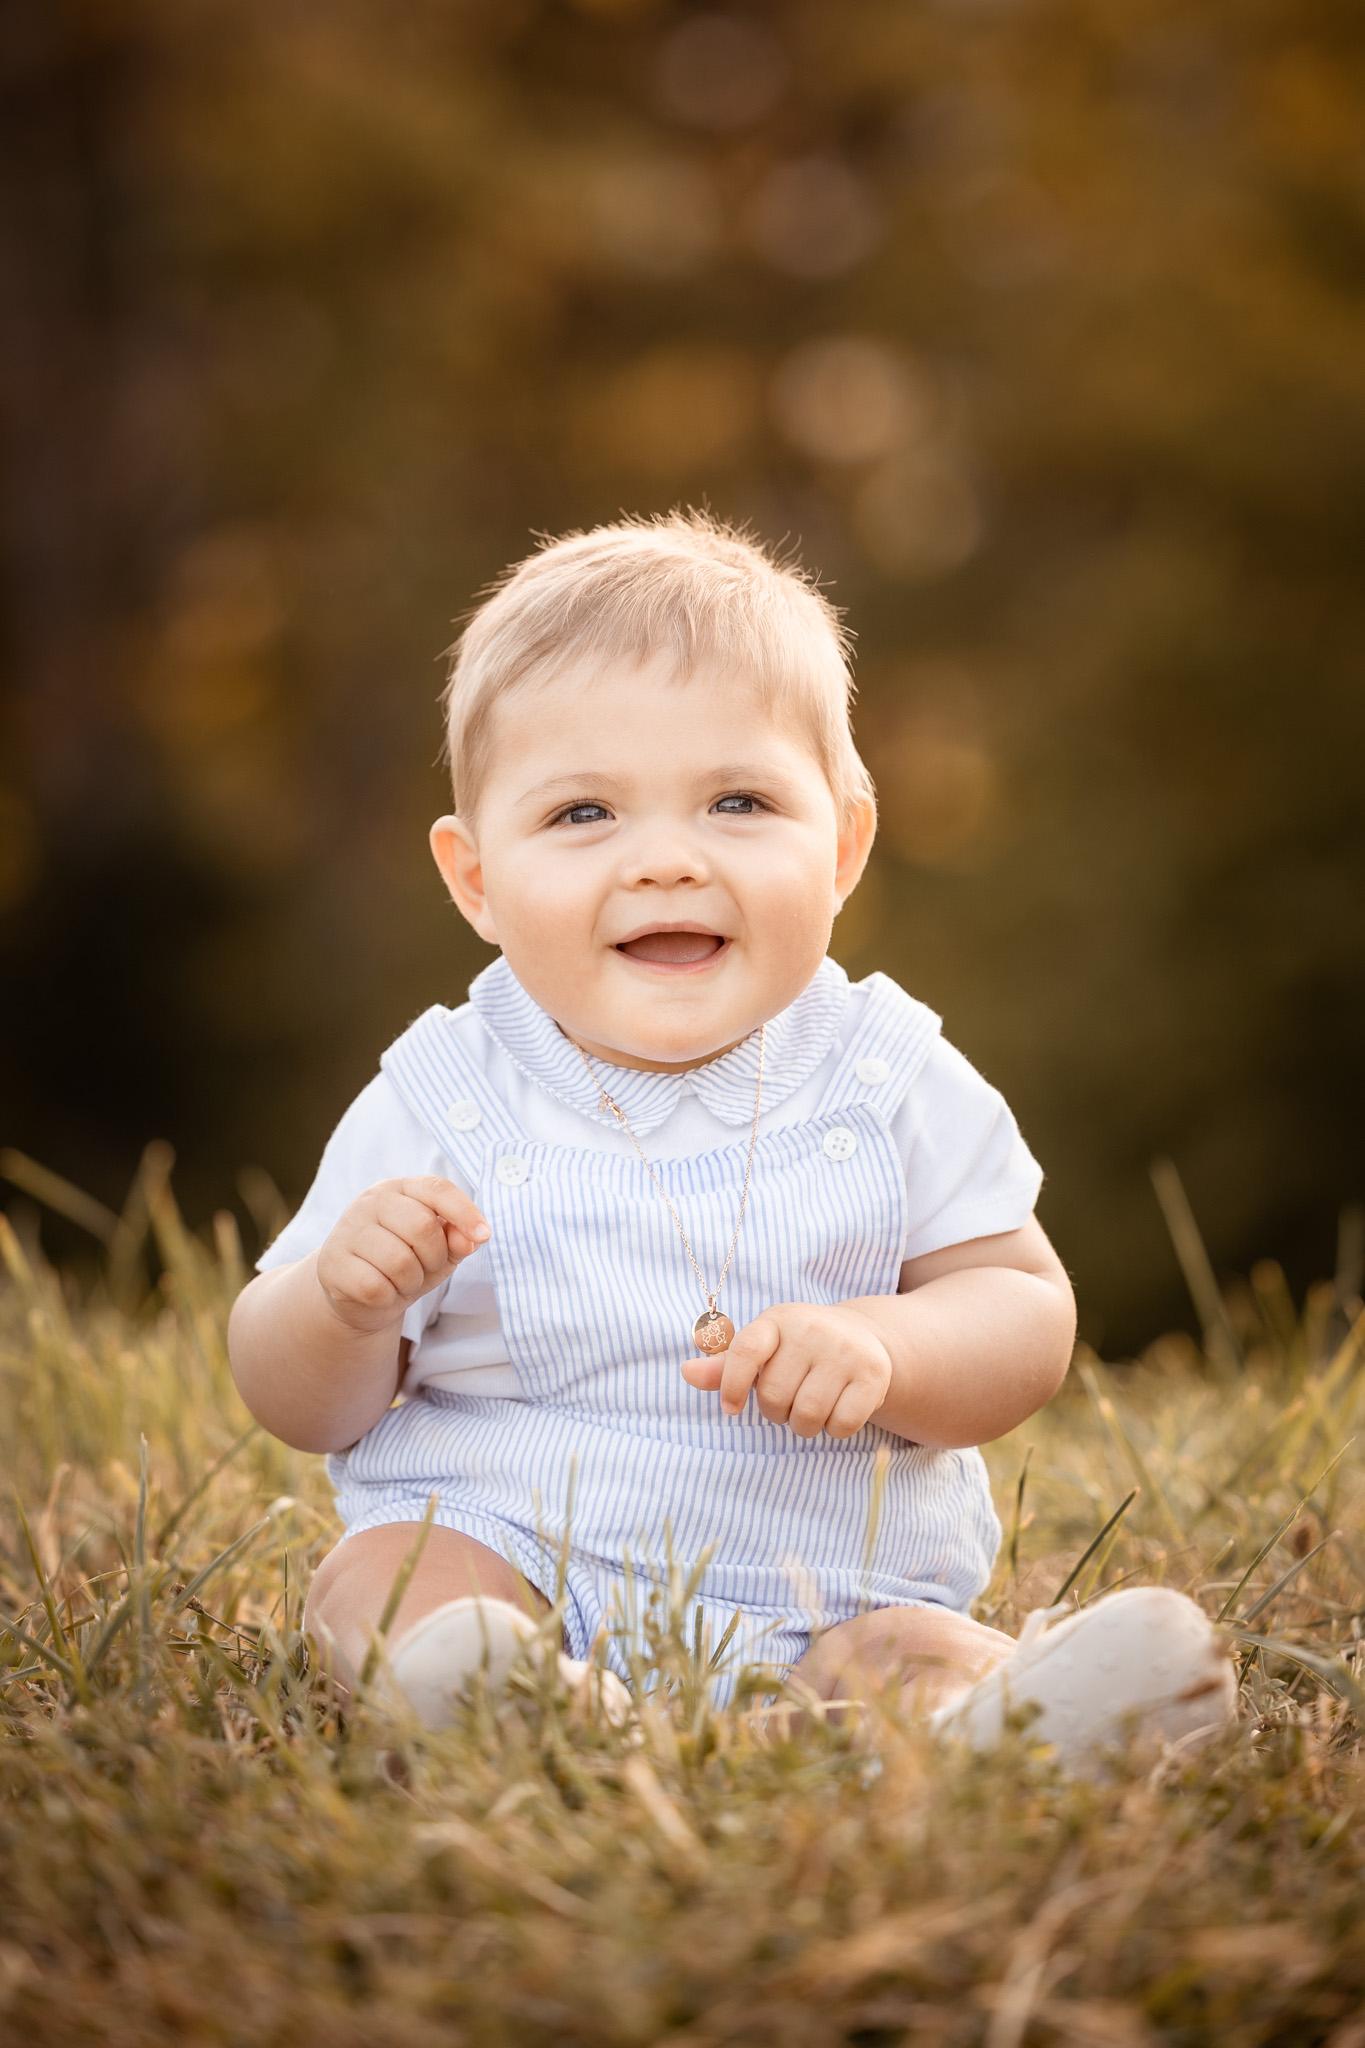 petit garcon en salopette bleu en balade 18 mois assis dans l'herbe